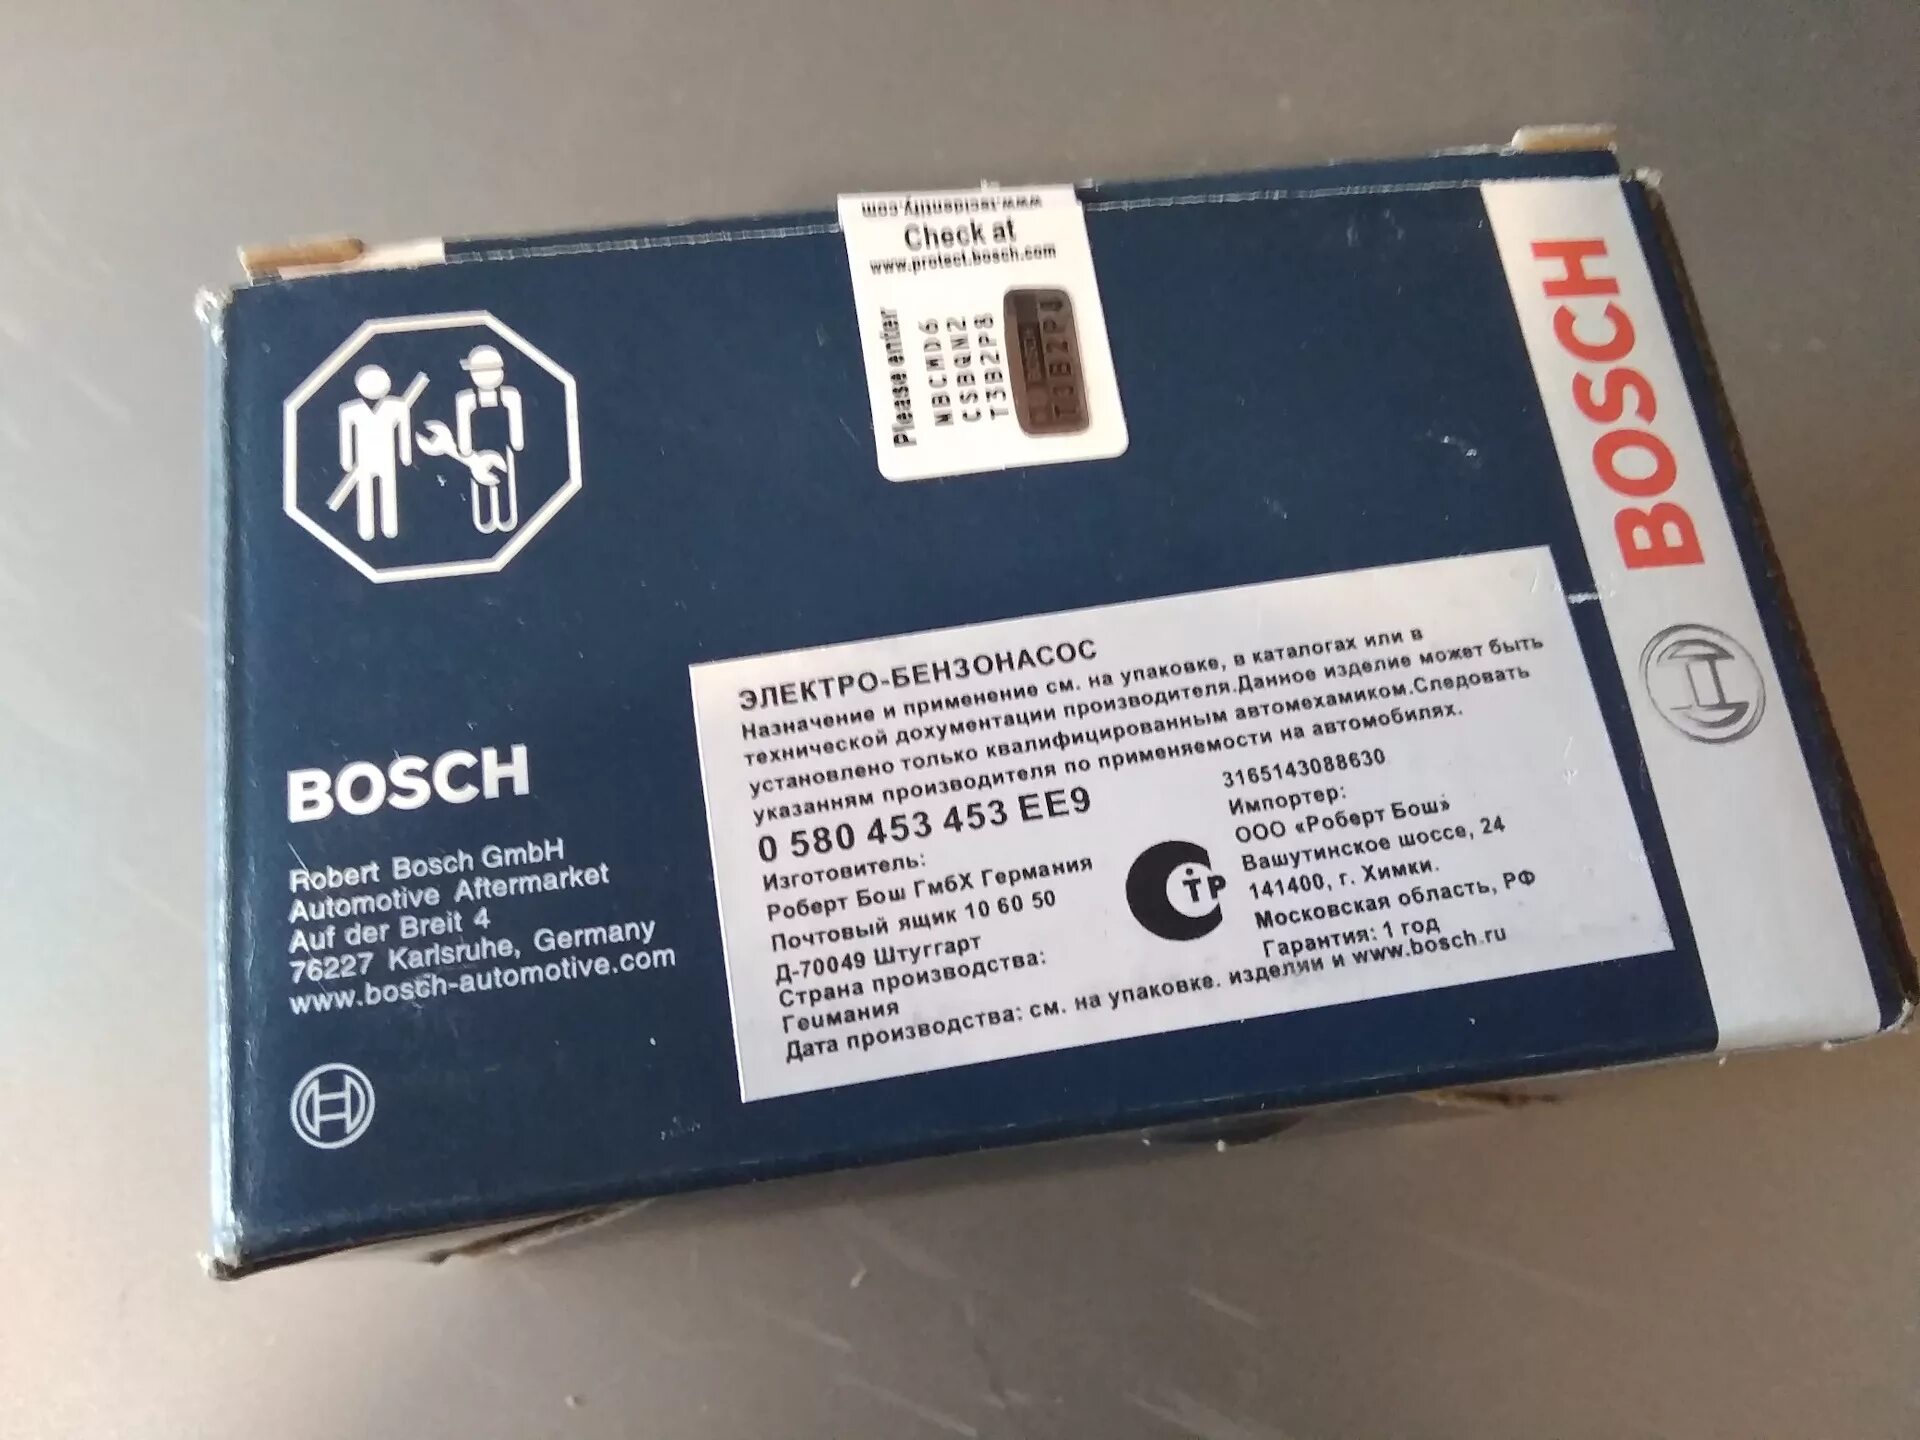 Robert Bosch GMBH производитель. Бош производитель Страна. Код изготовителя Bosch. Код завода Bosch.